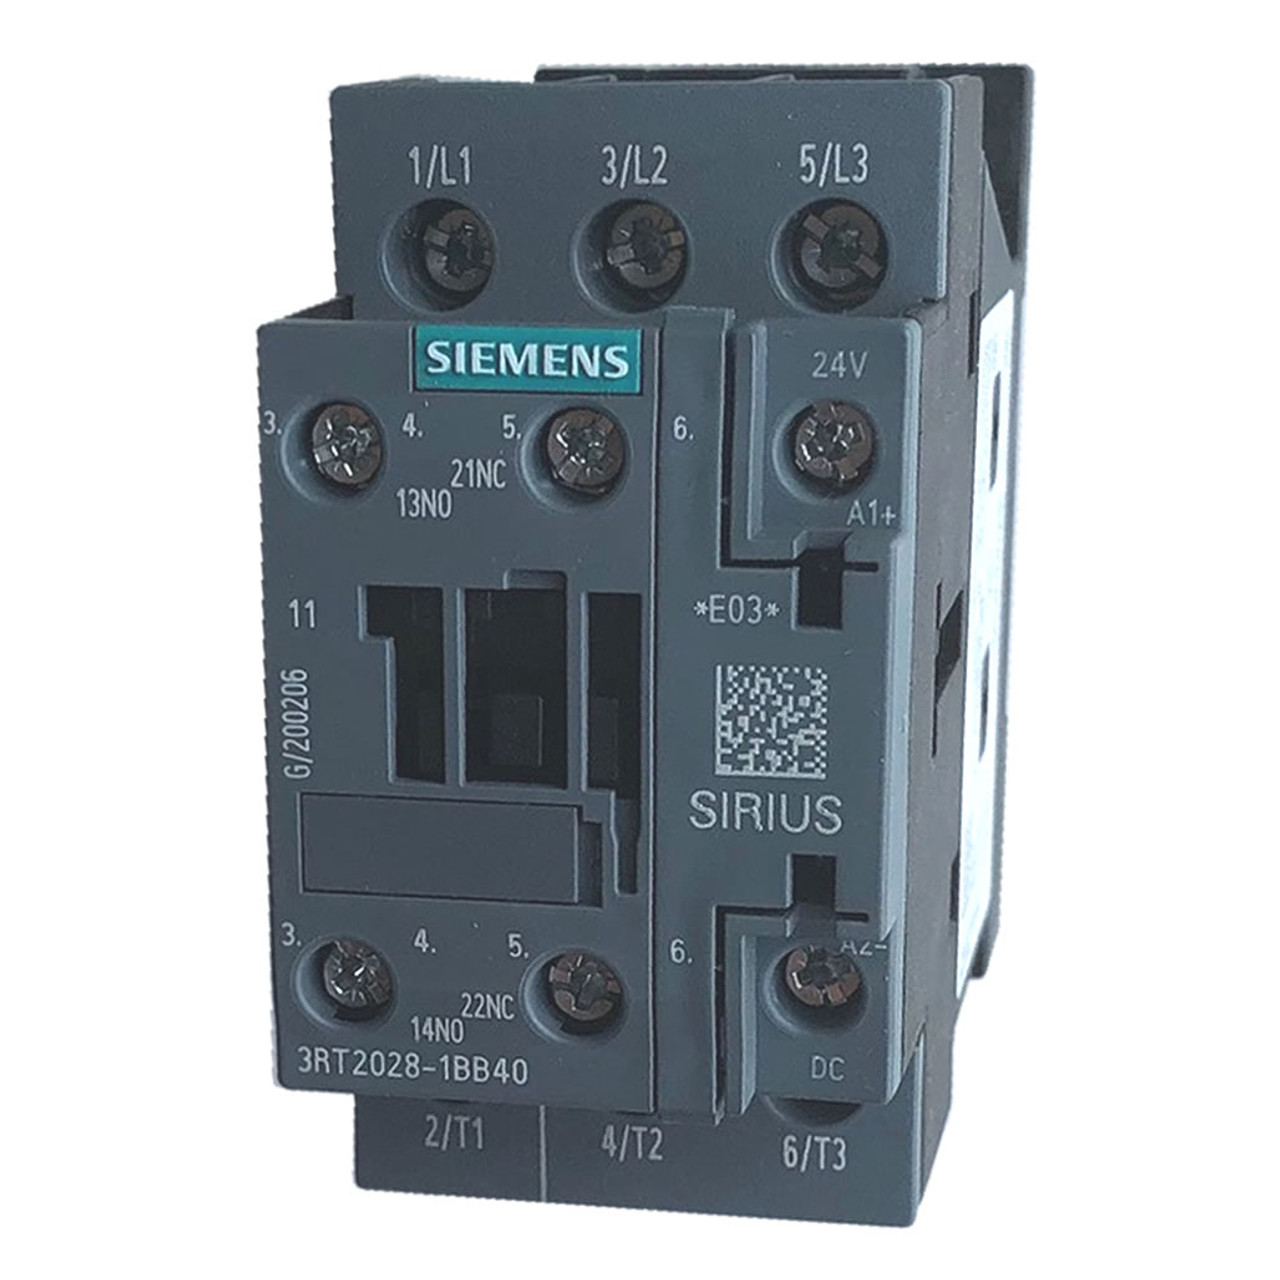 Siemens 3RT2028-1BW40 contactor